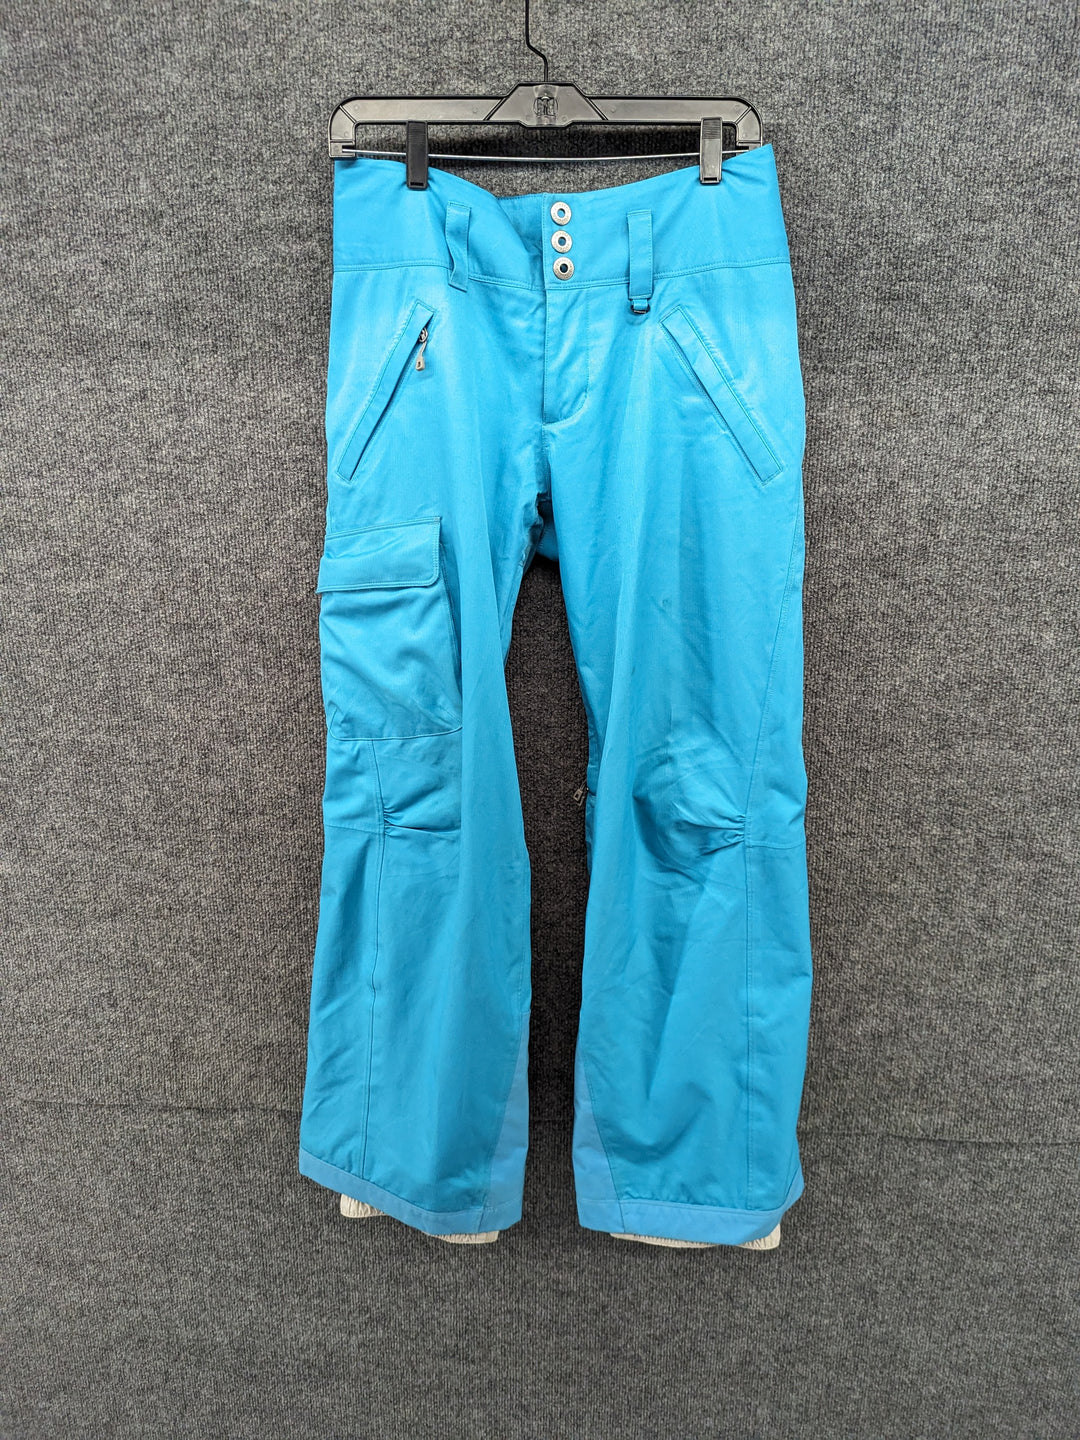 Patagonia Size W Medium Women's Ski Pants – Rambleraven Gear Trader